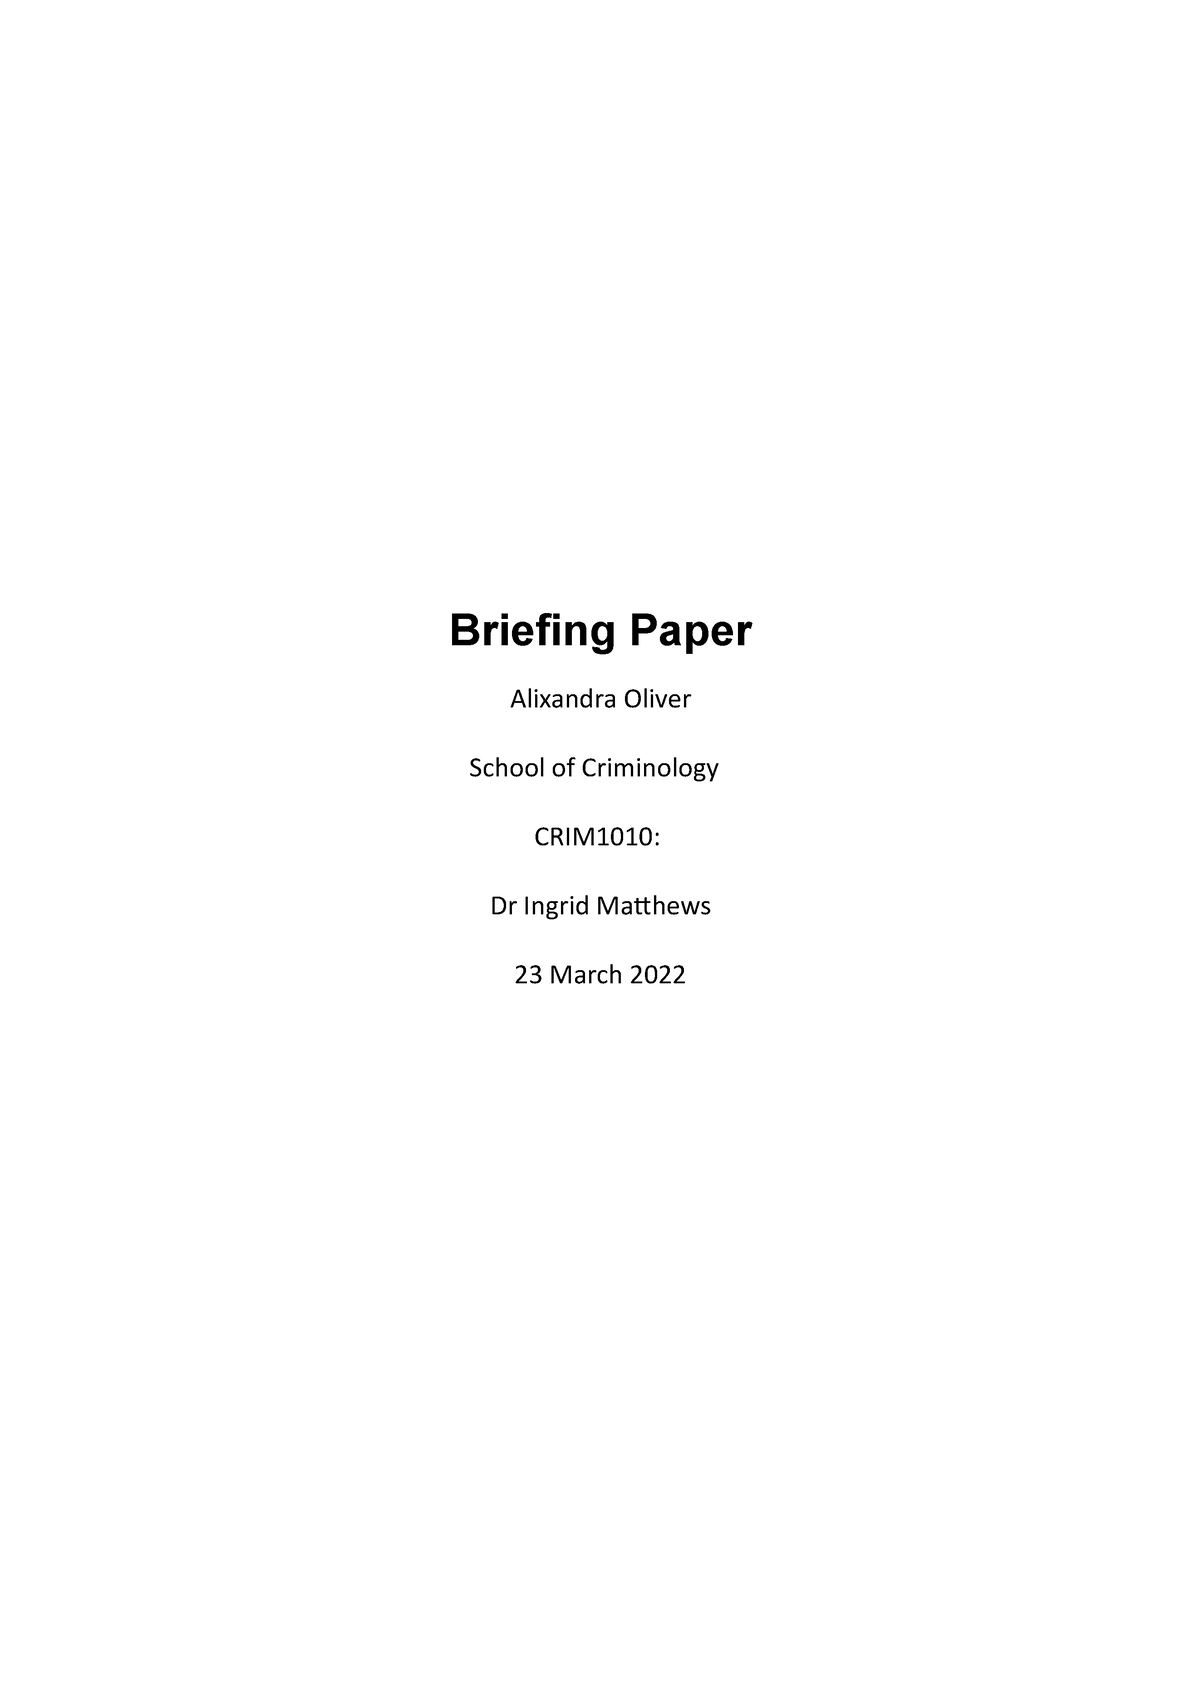 criminology briefing paper